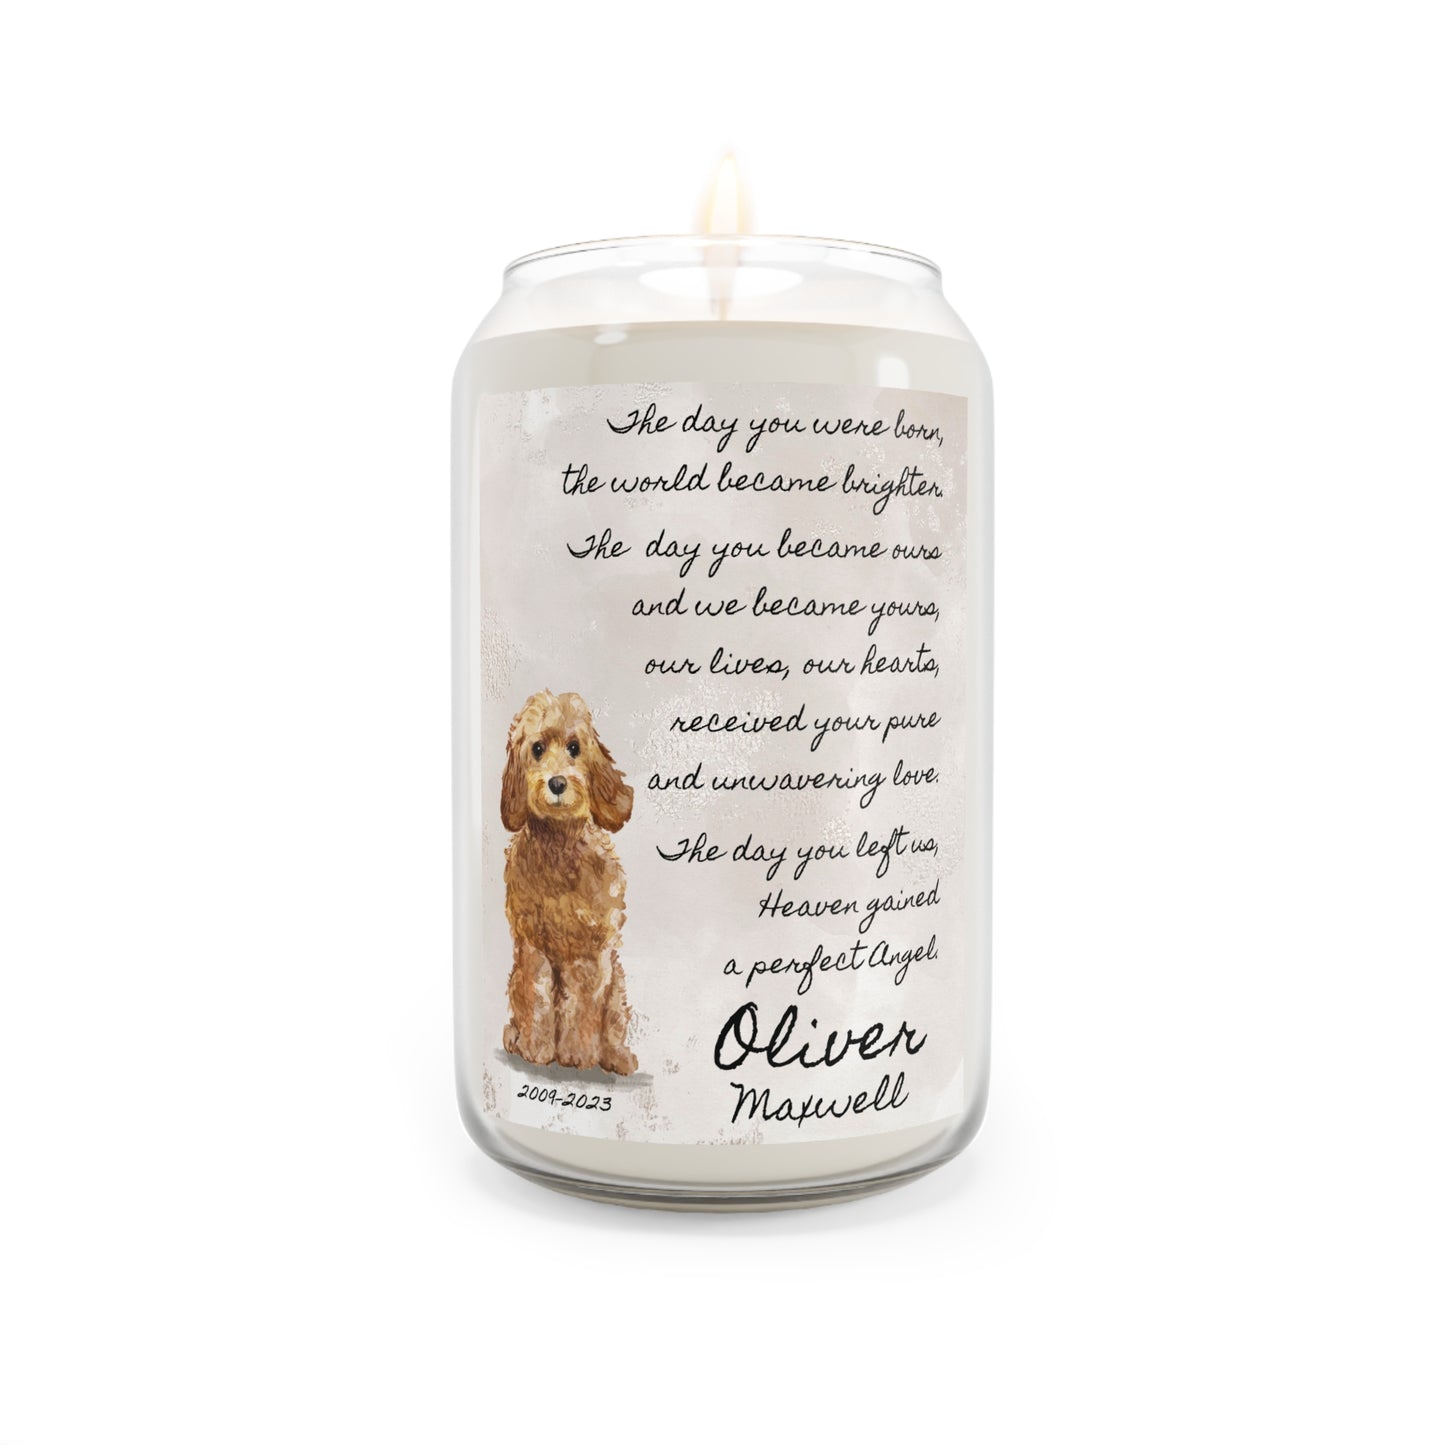 The Day - Silver Labrador Retriever Pet Memorial Scented Candle